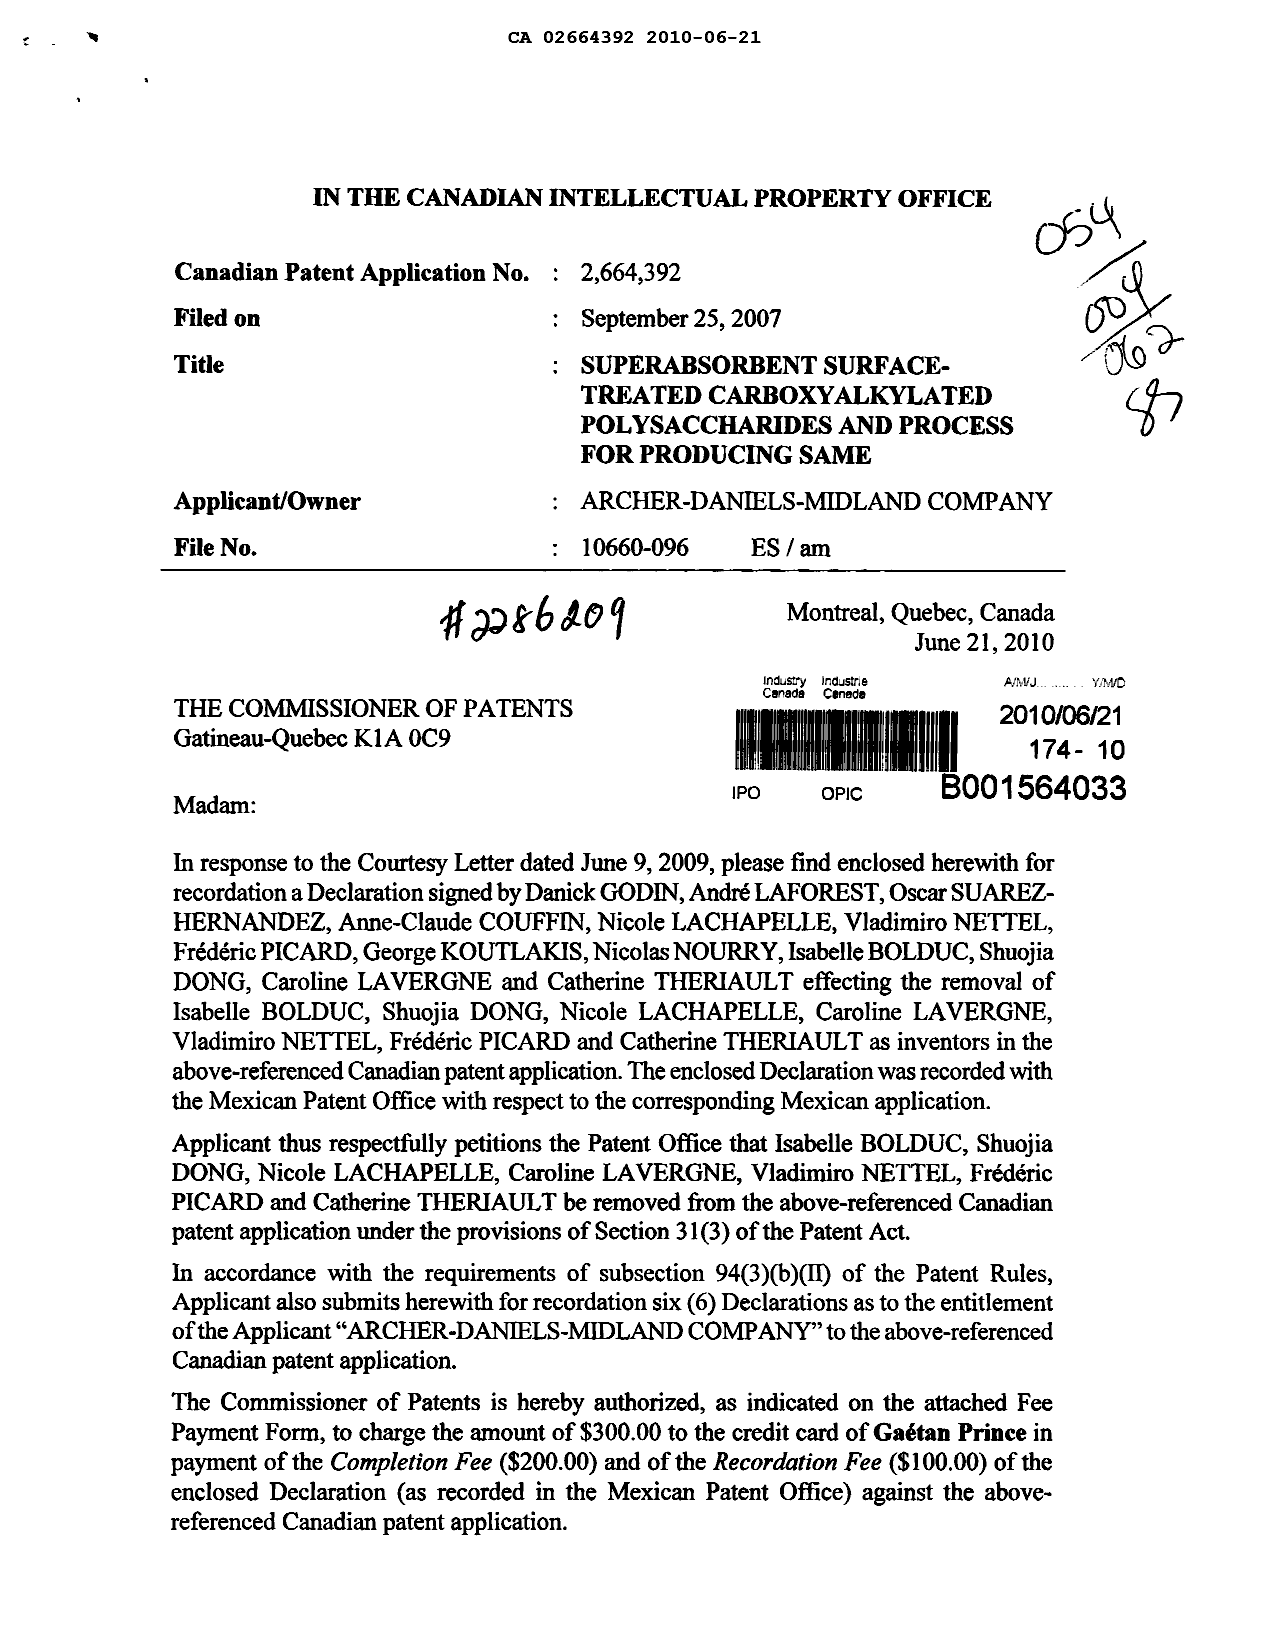 Canadian Patent Document 2664392. Correspondence 20100621. Image 1 of 8